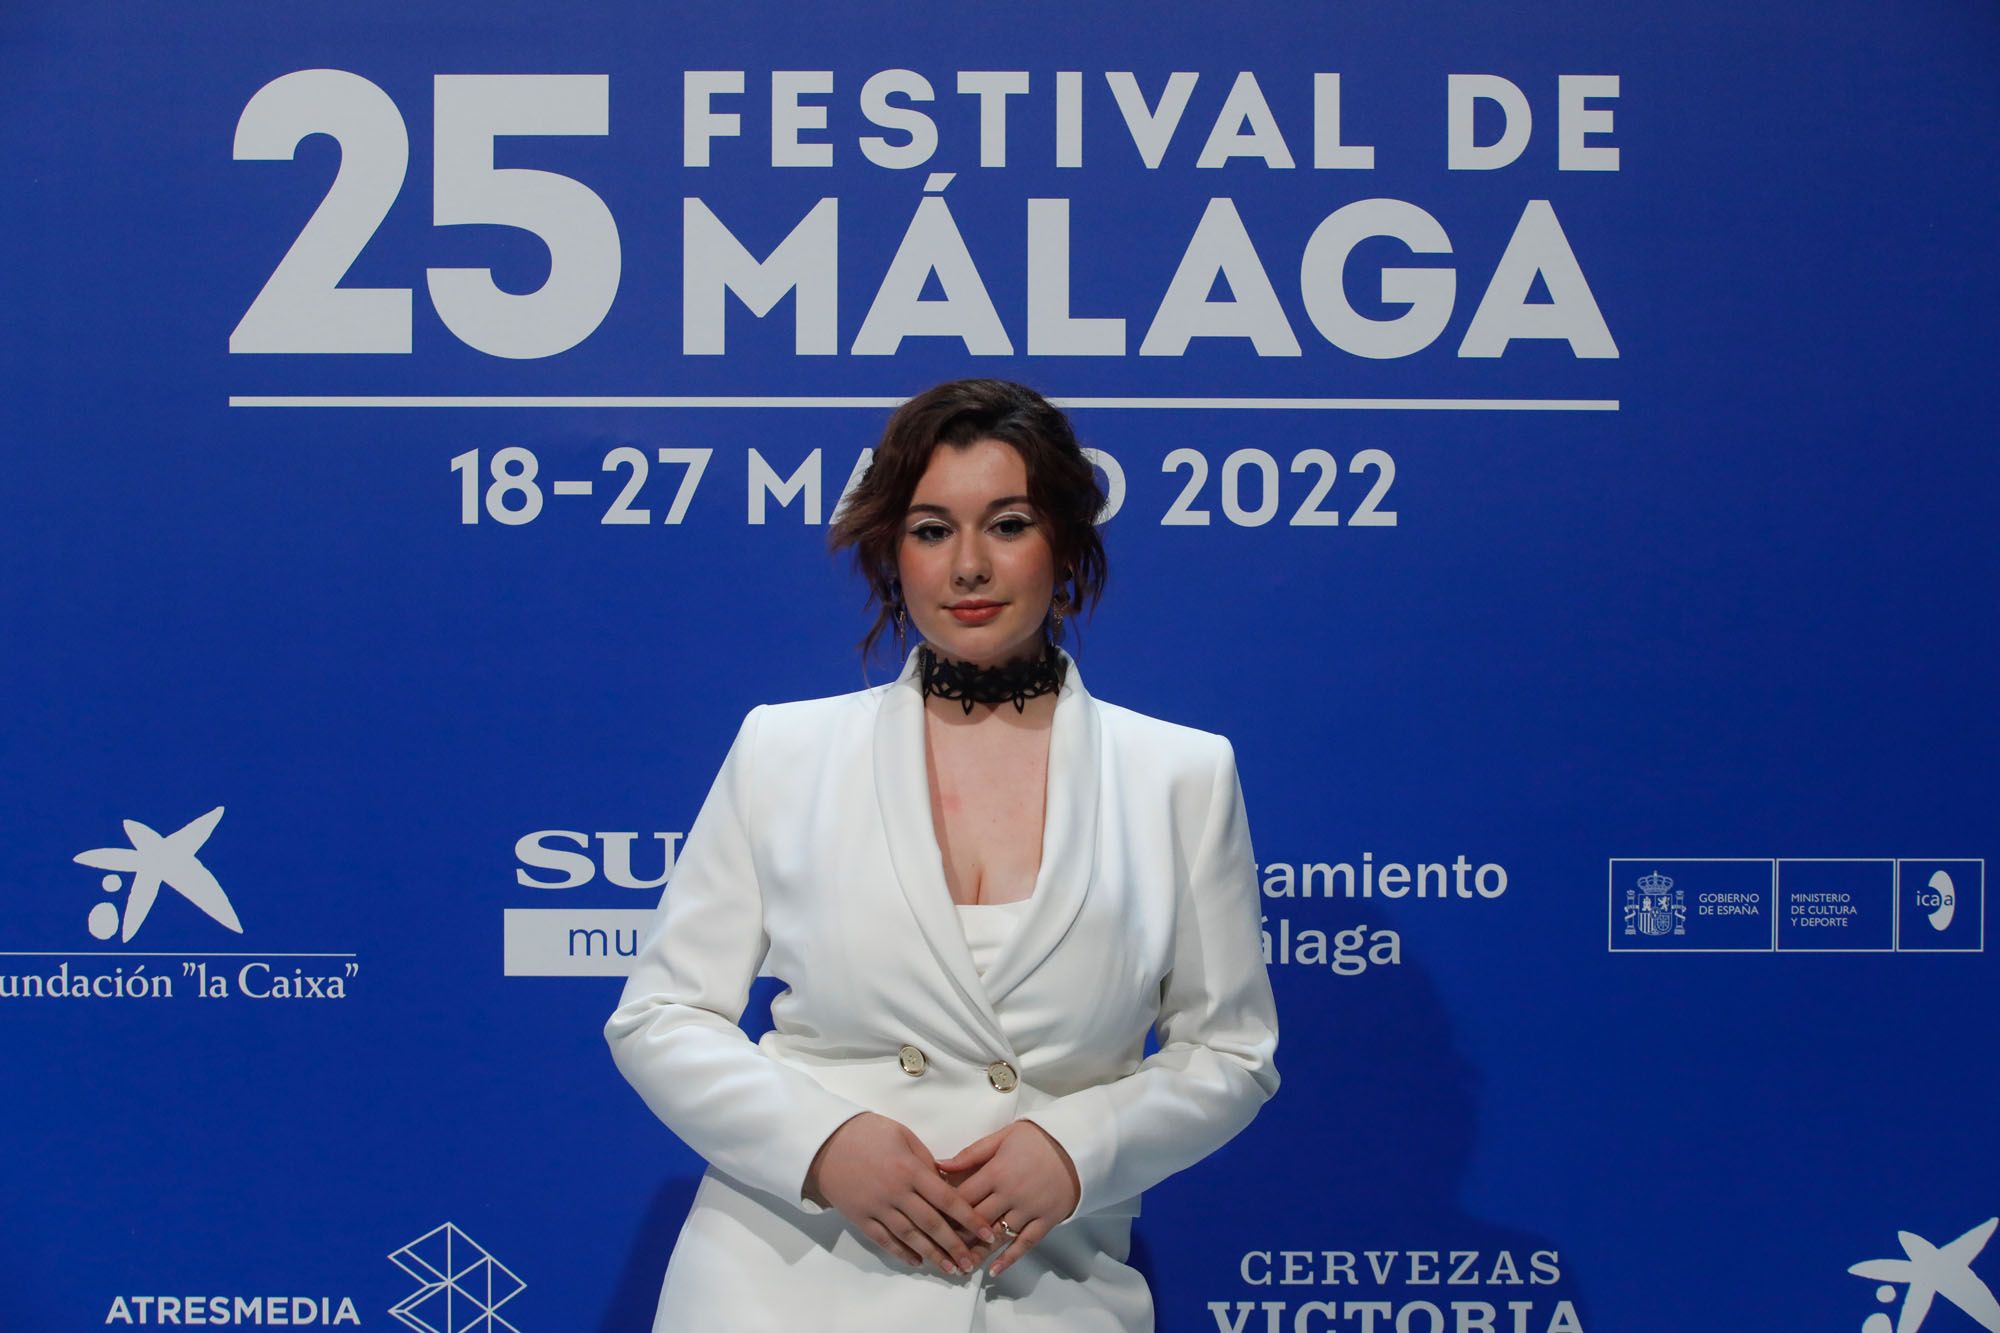 Las imágenes de la alfombra roja del Festival de Málaga del miércoles 23 de marzo